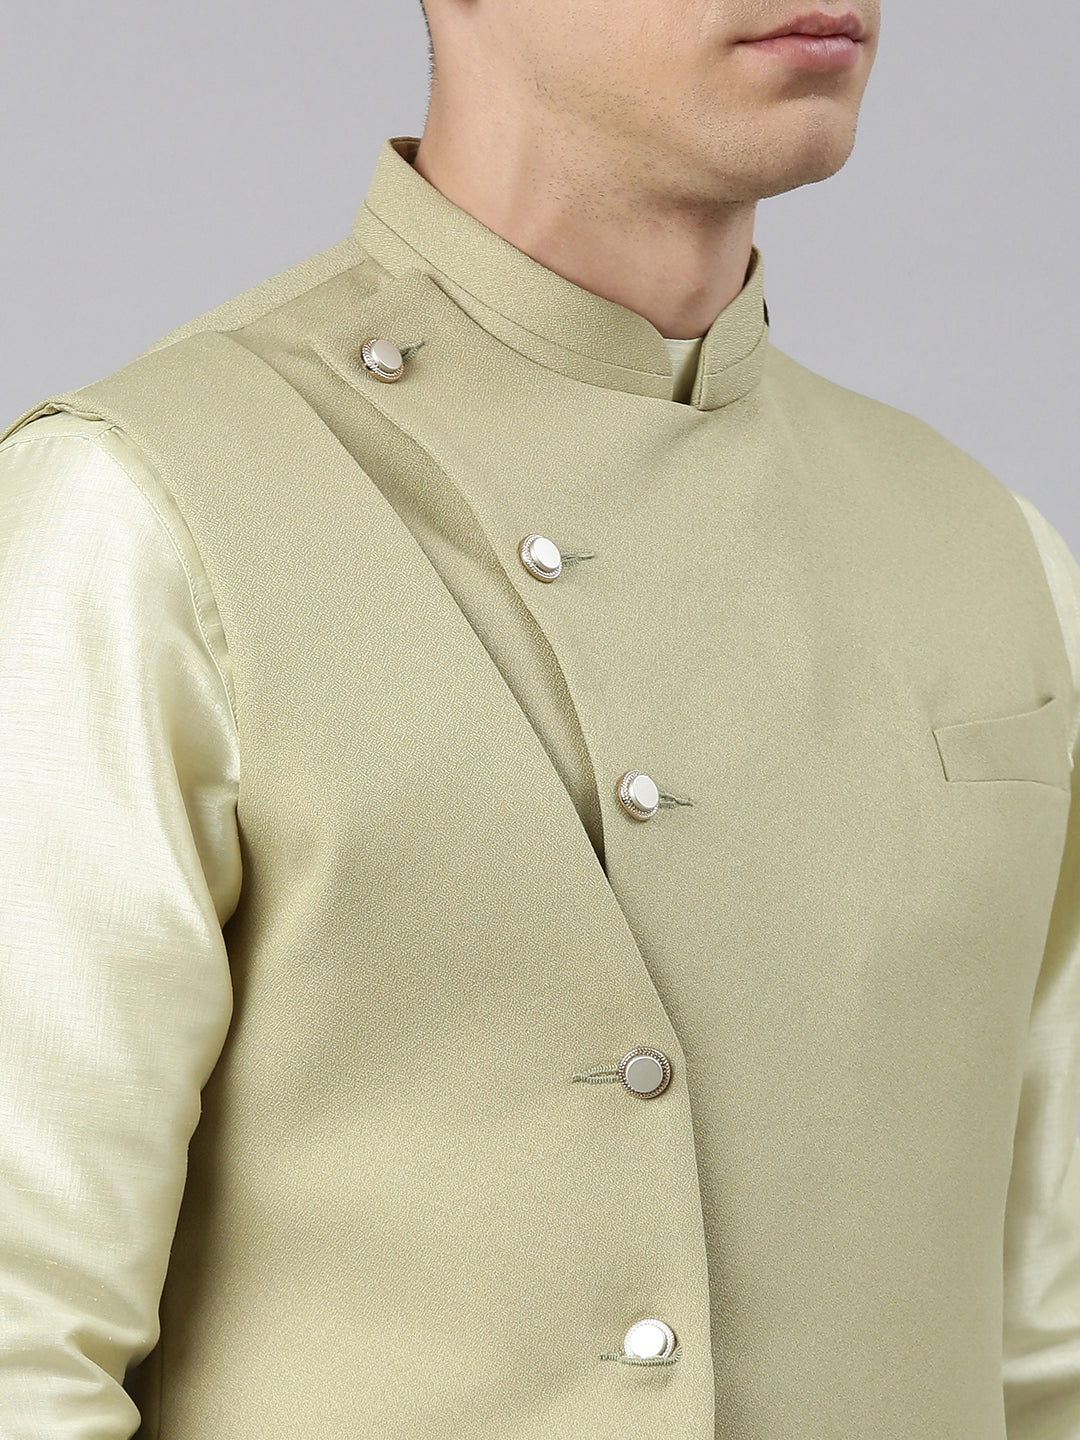 Mint Green Waistcoat Jacket With Mint Crushed Kurta